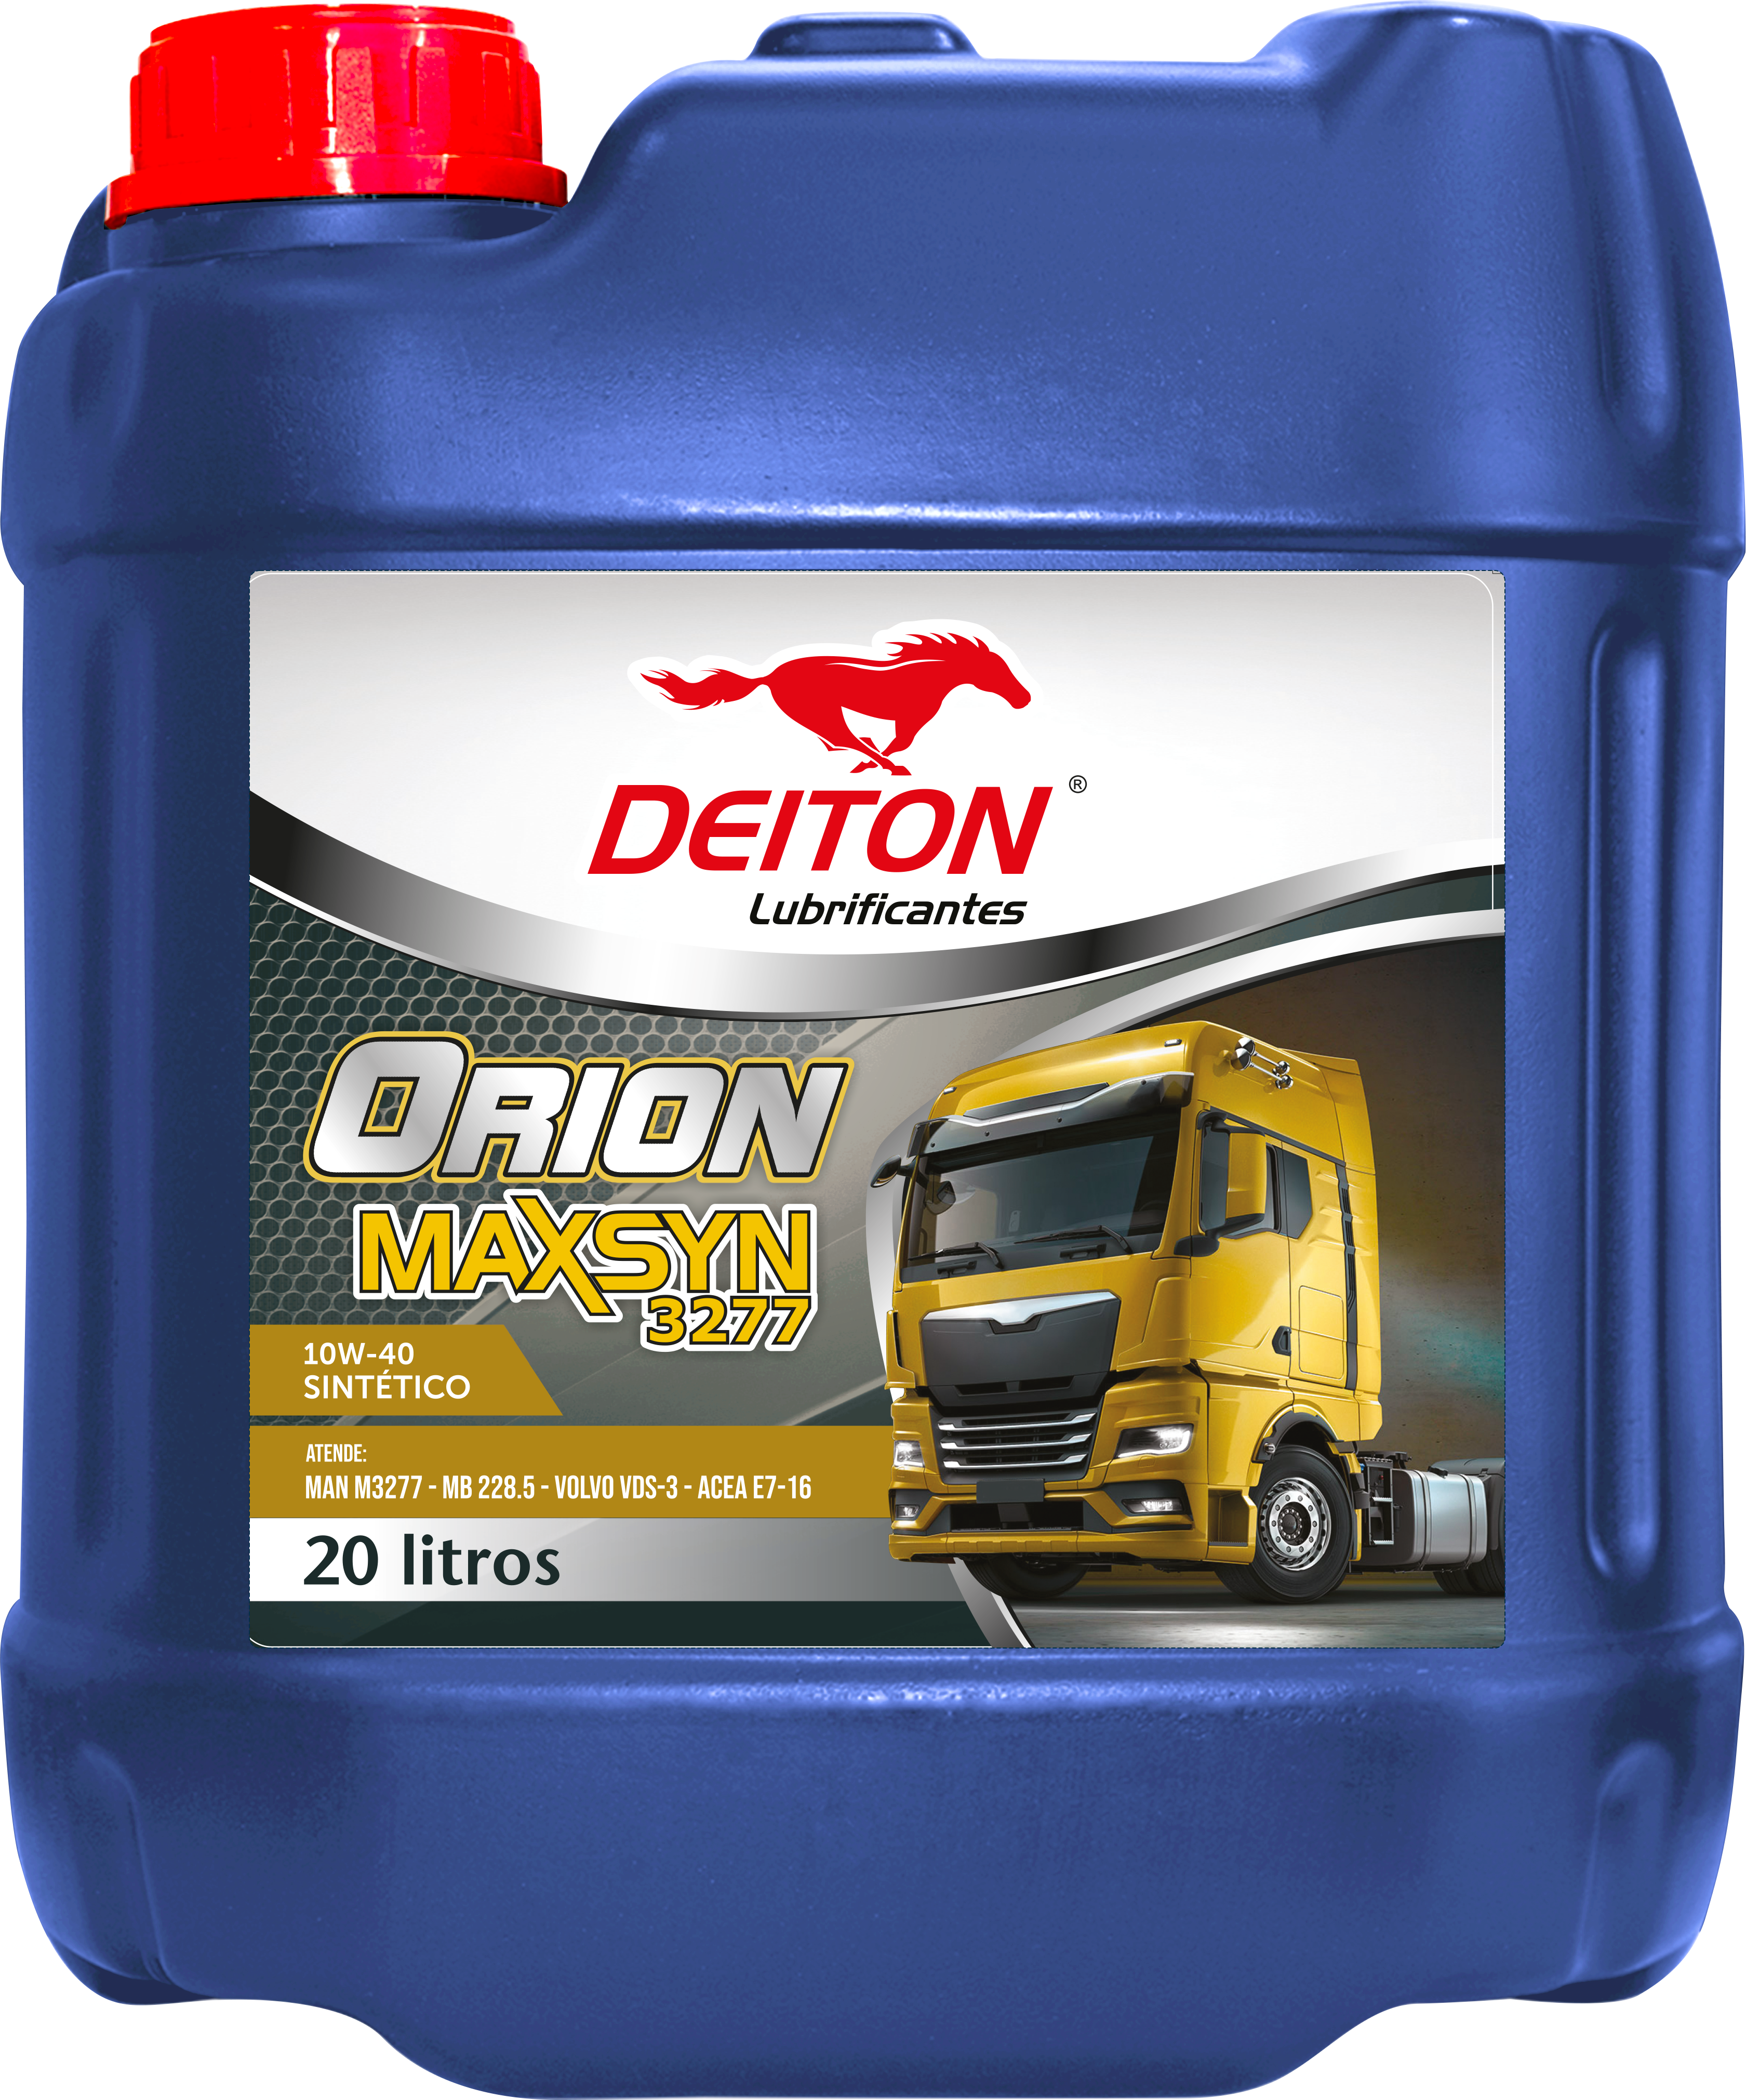 DEITON ORION MAXSYN 3277